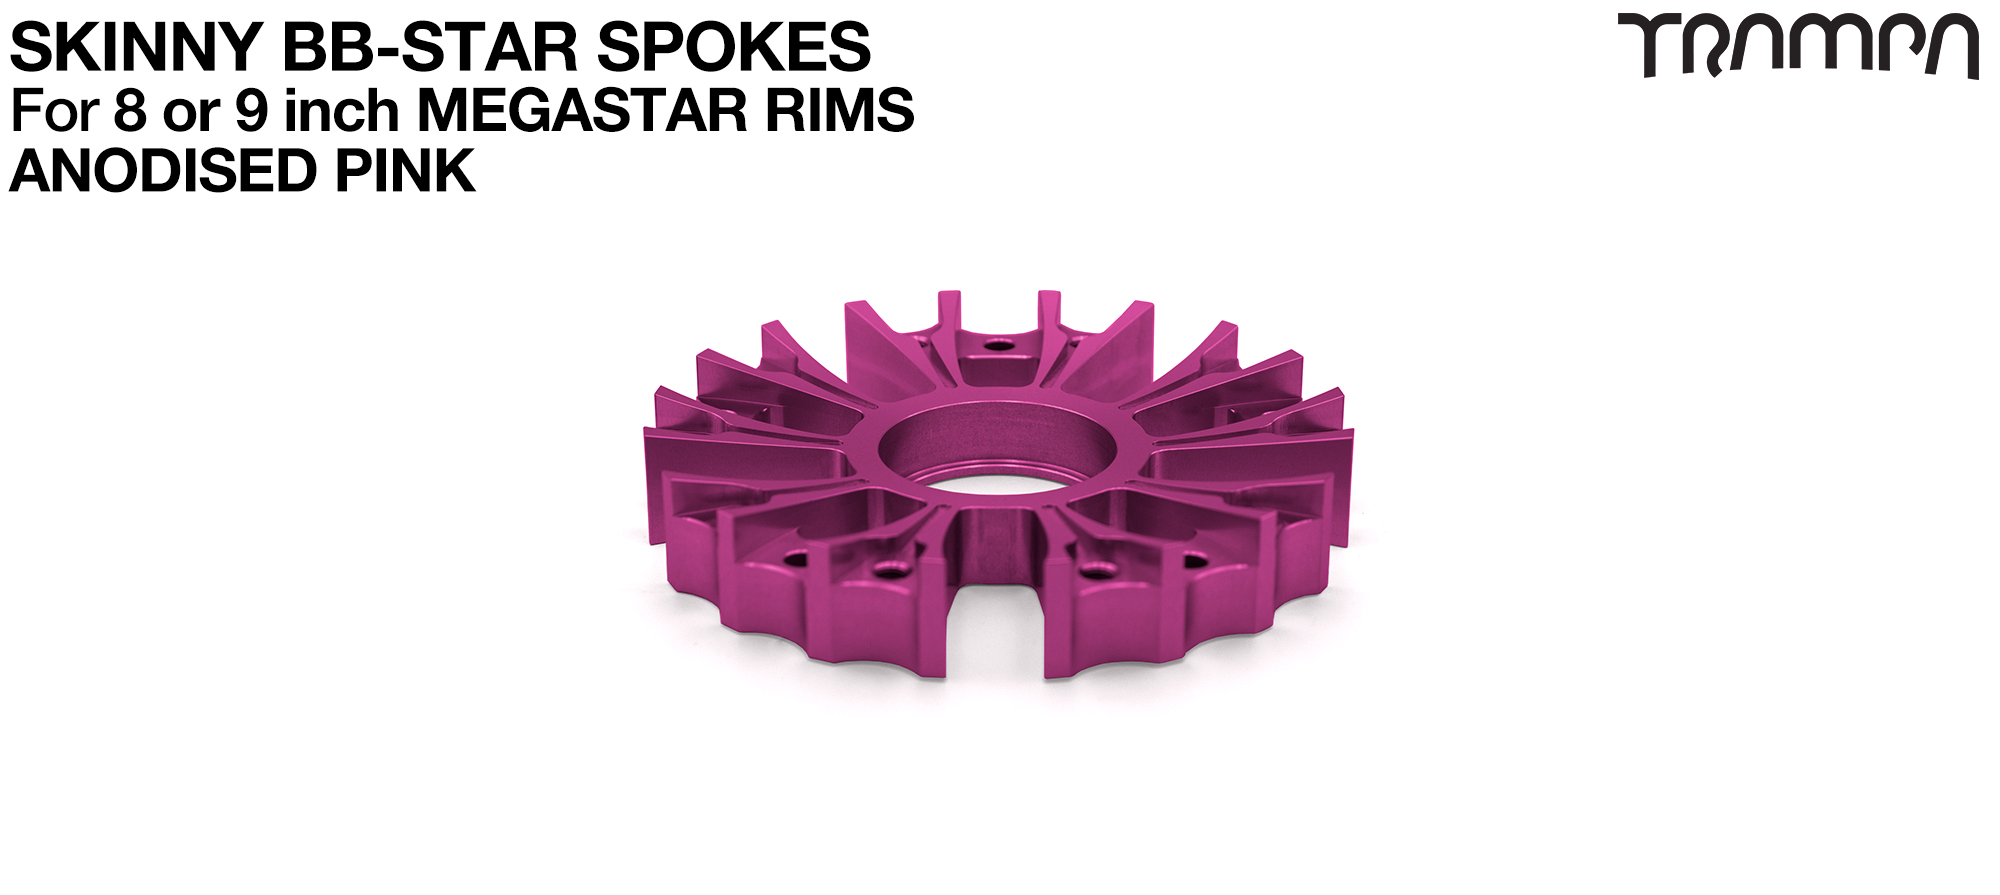 BBStar SKINNY Spoke for MEGASTAR 8 & 9 Rims - Extruded T6 Heat Treated & CNC Precision milled - PINK